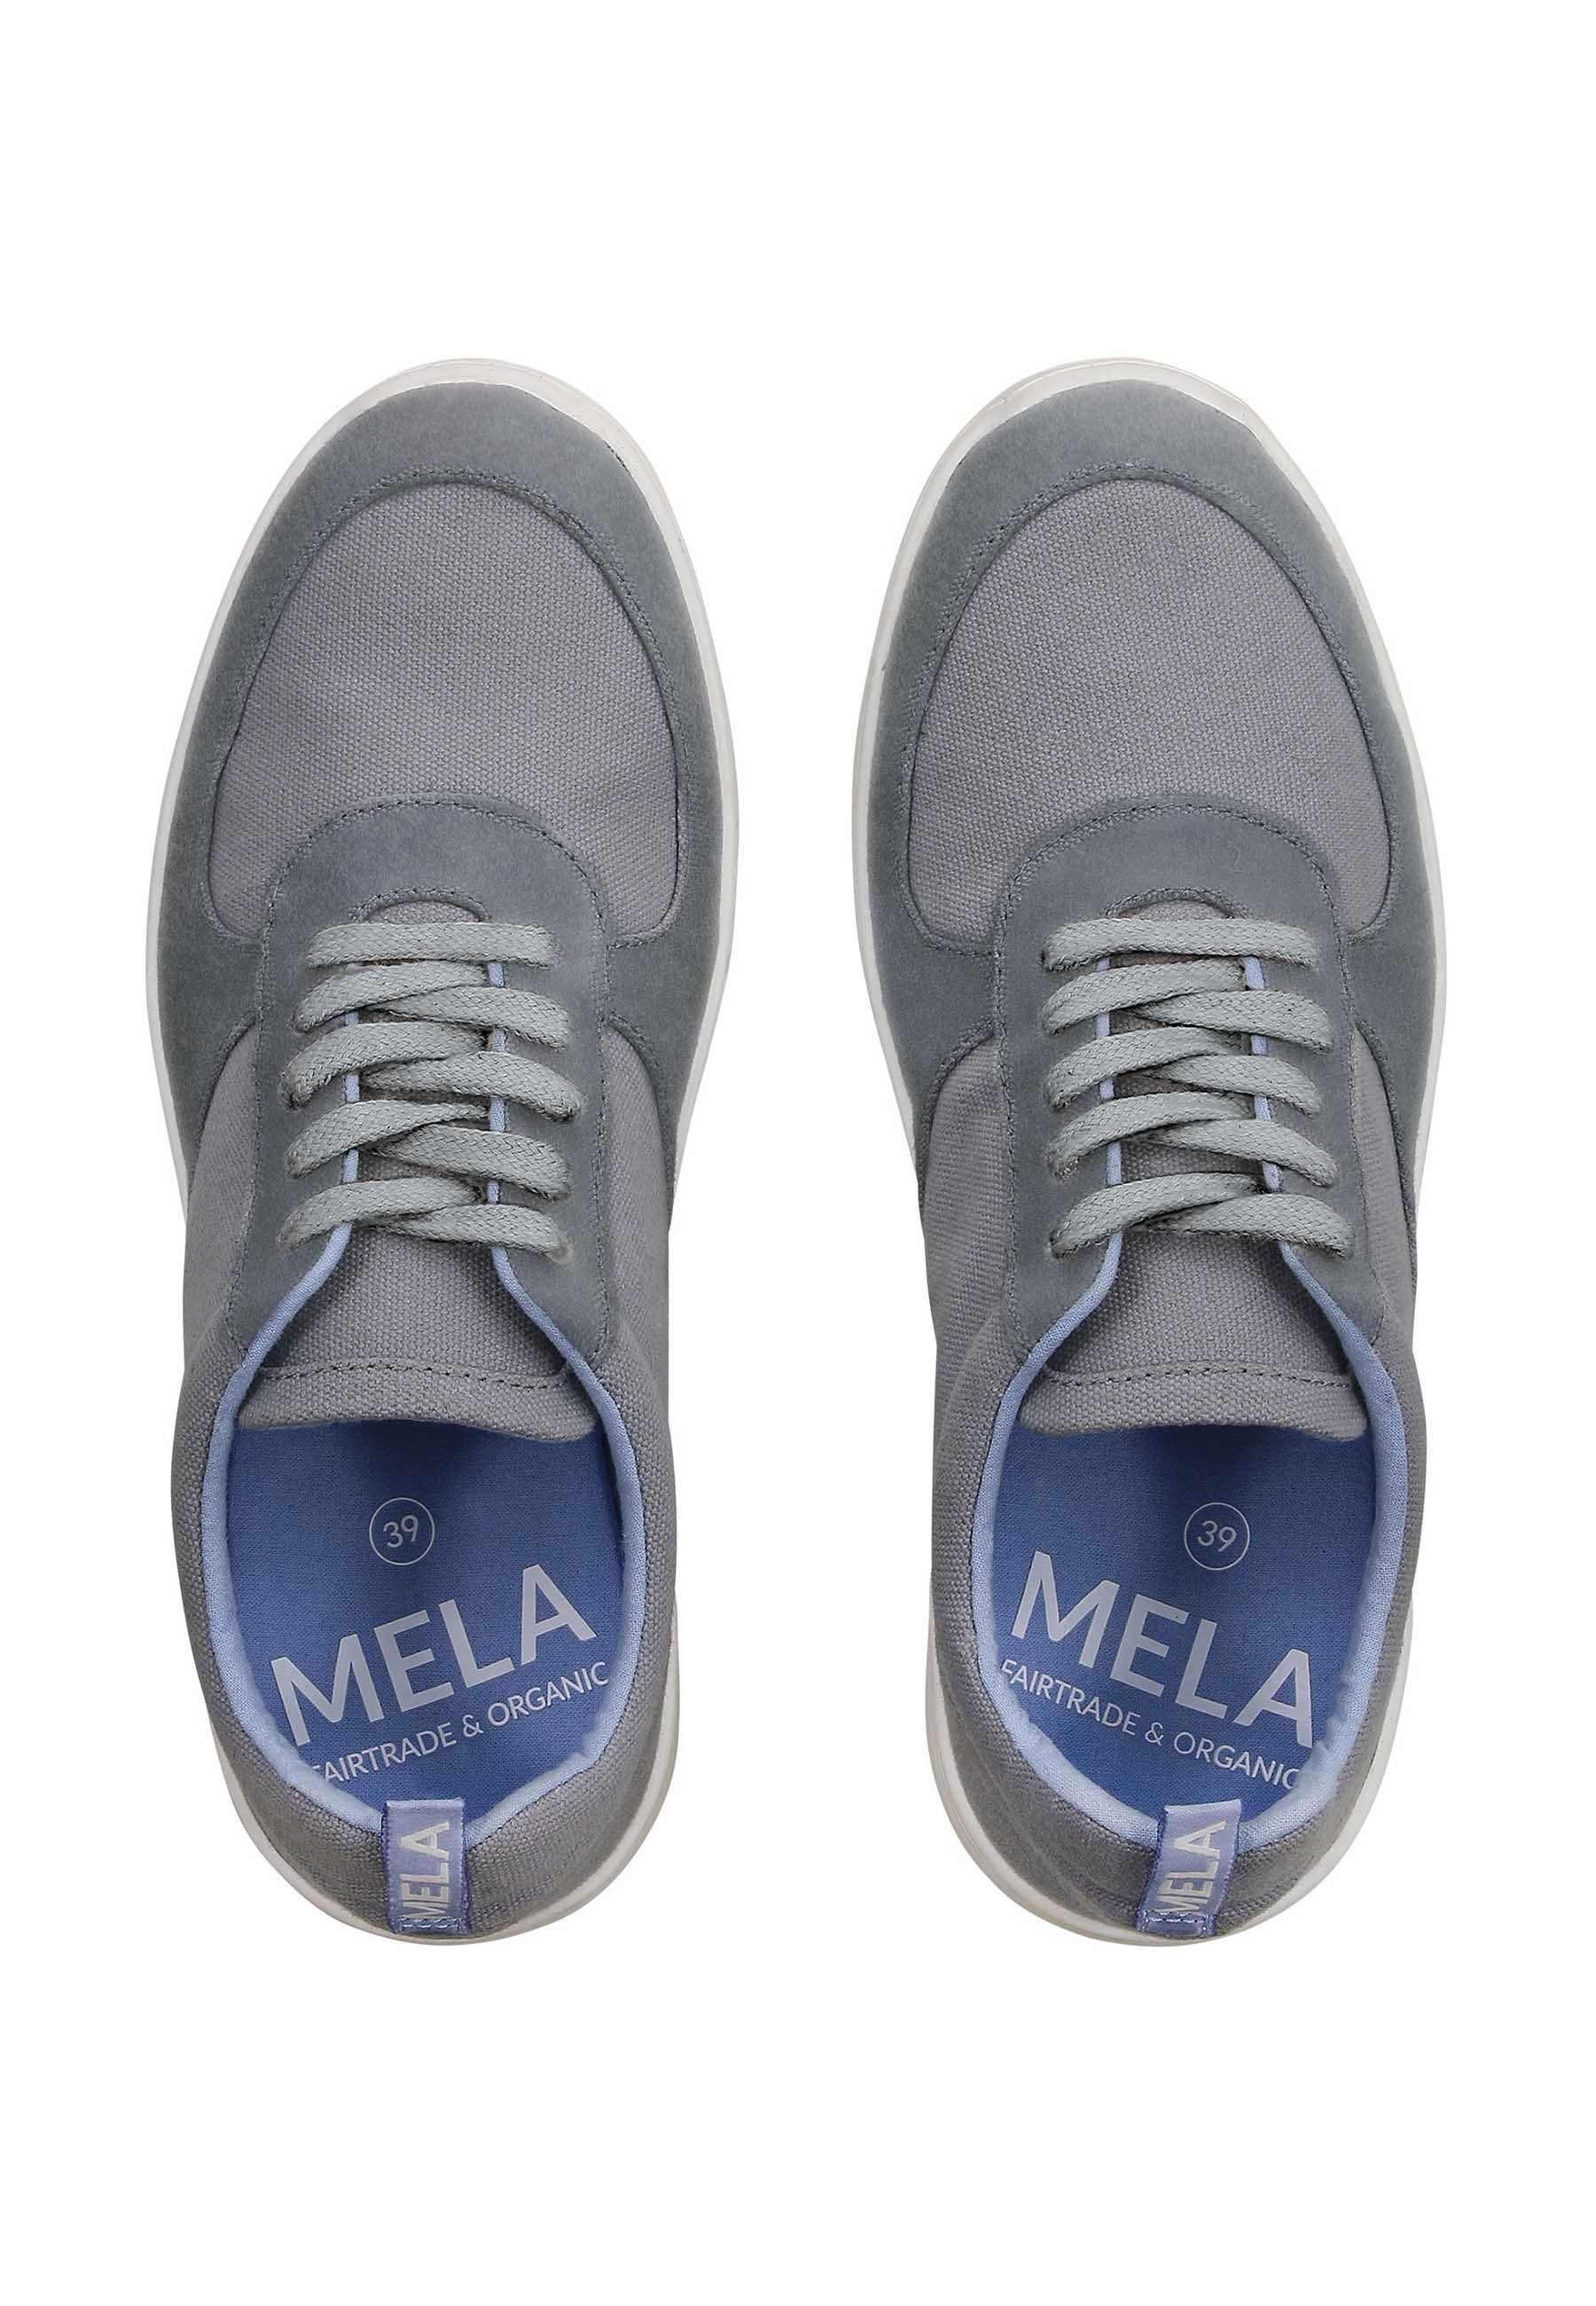 Damen im (Leder) grau MELAWEAR Sneaker Innenschuh Biobaumwoll-Gewebe Sneaker Strapazierfähiges MELA Leder